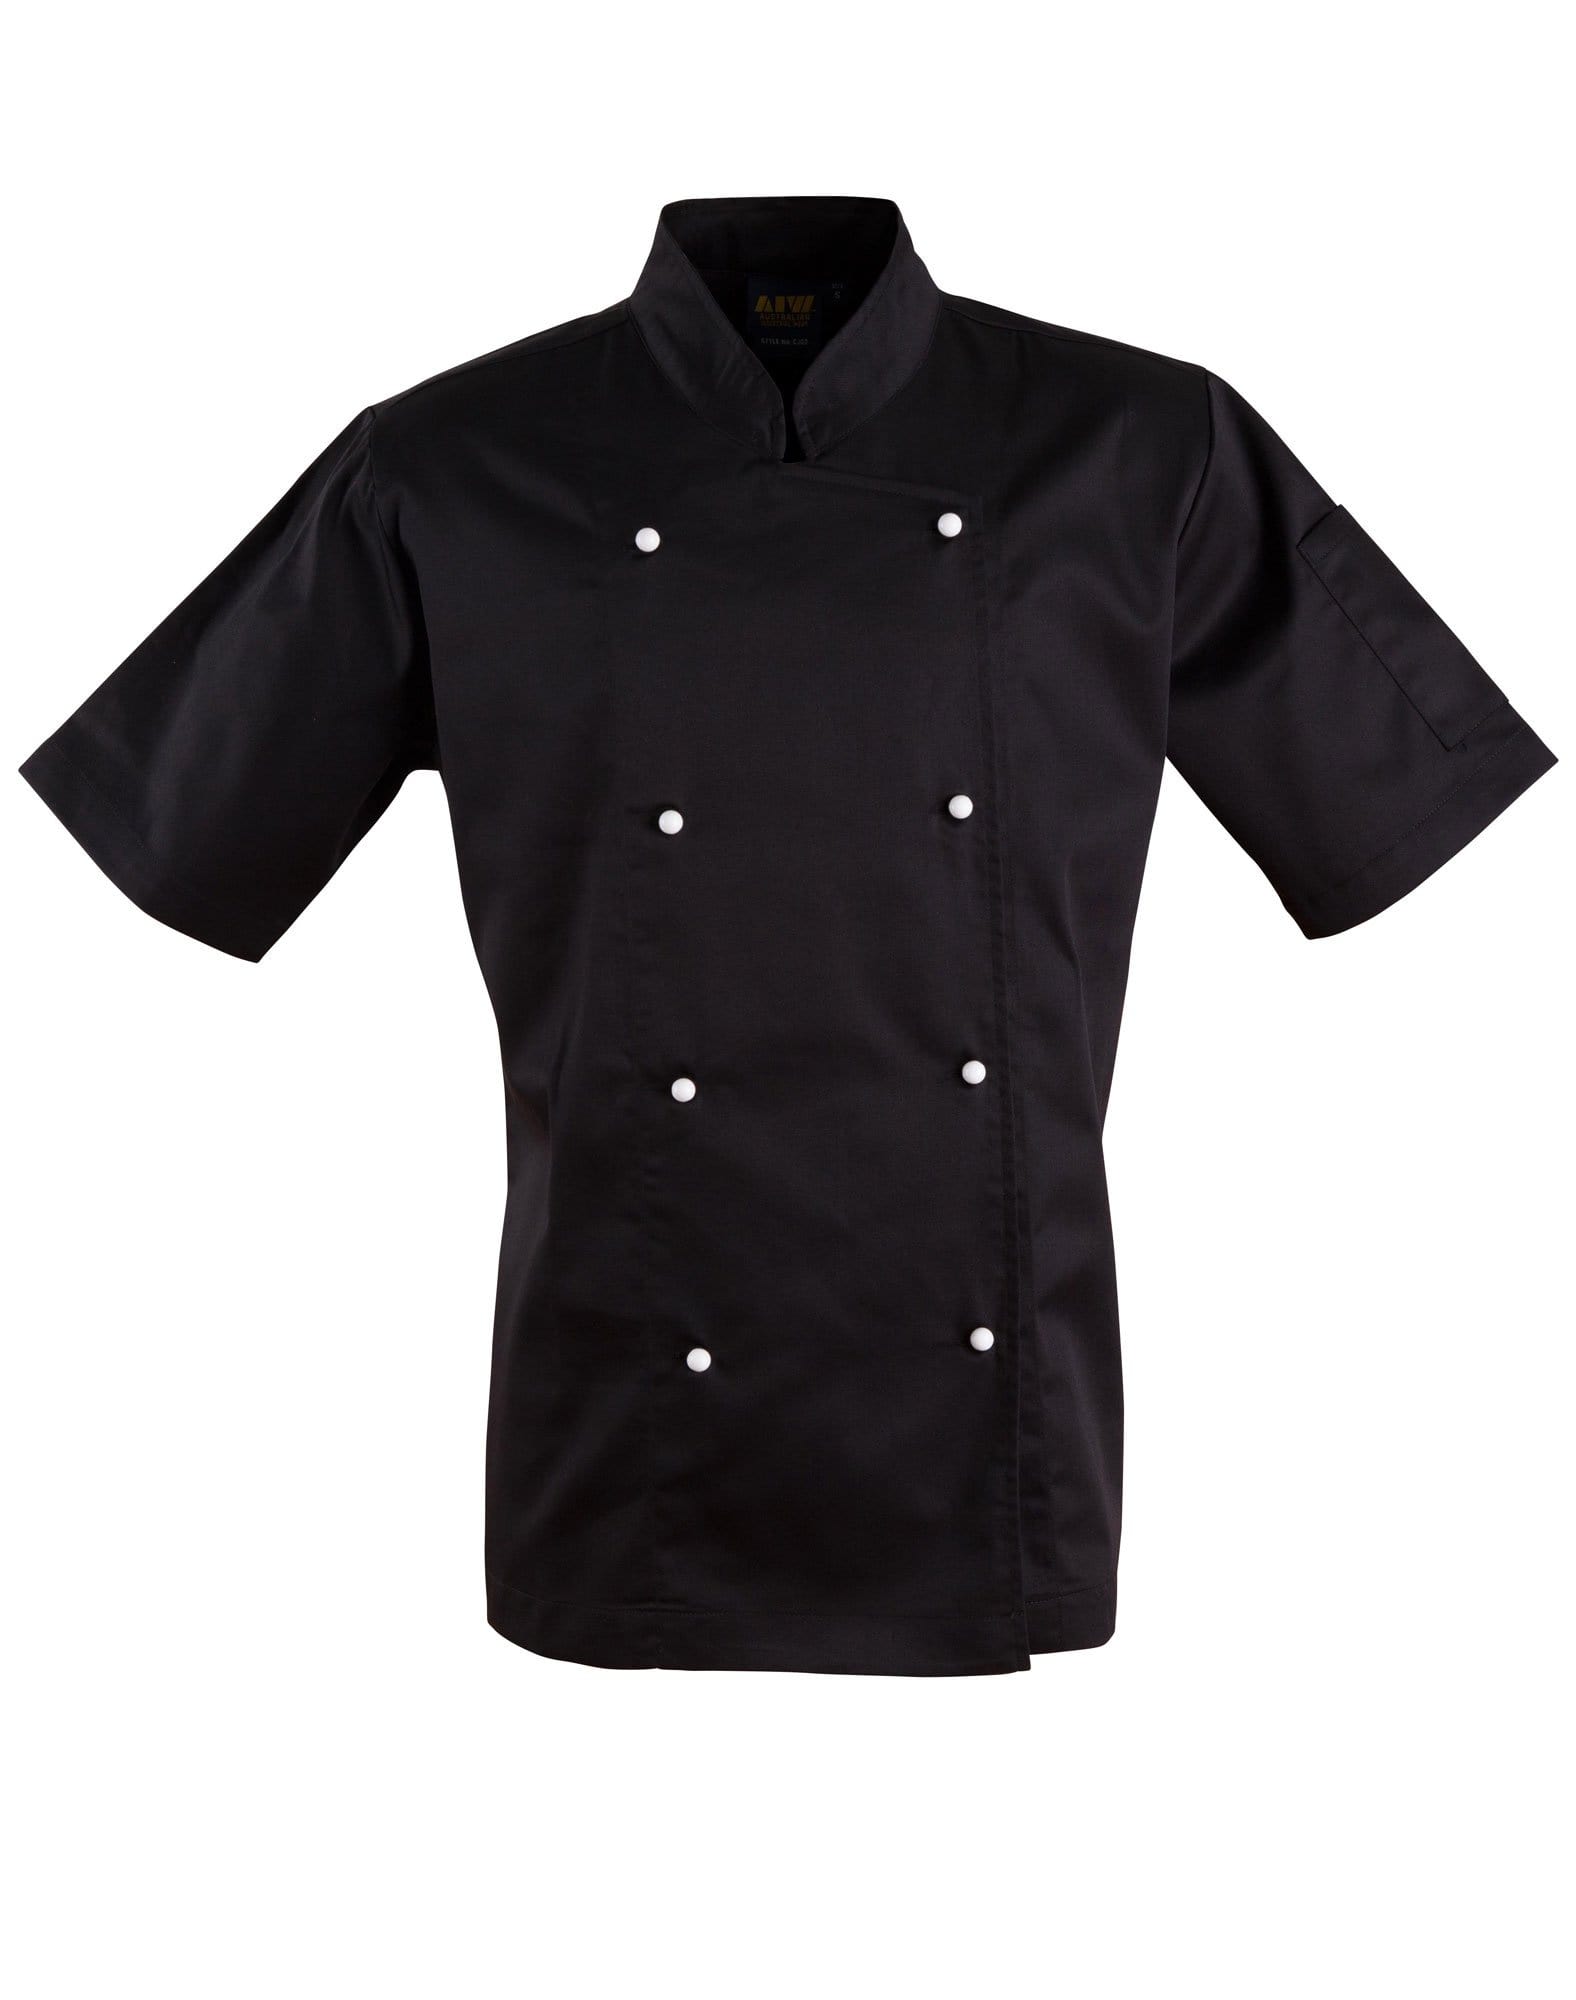 Chef’s Short Sleeve Jacket CJ02 Hospitality & Chefwear Australian Industrial Wear Black 2XS 